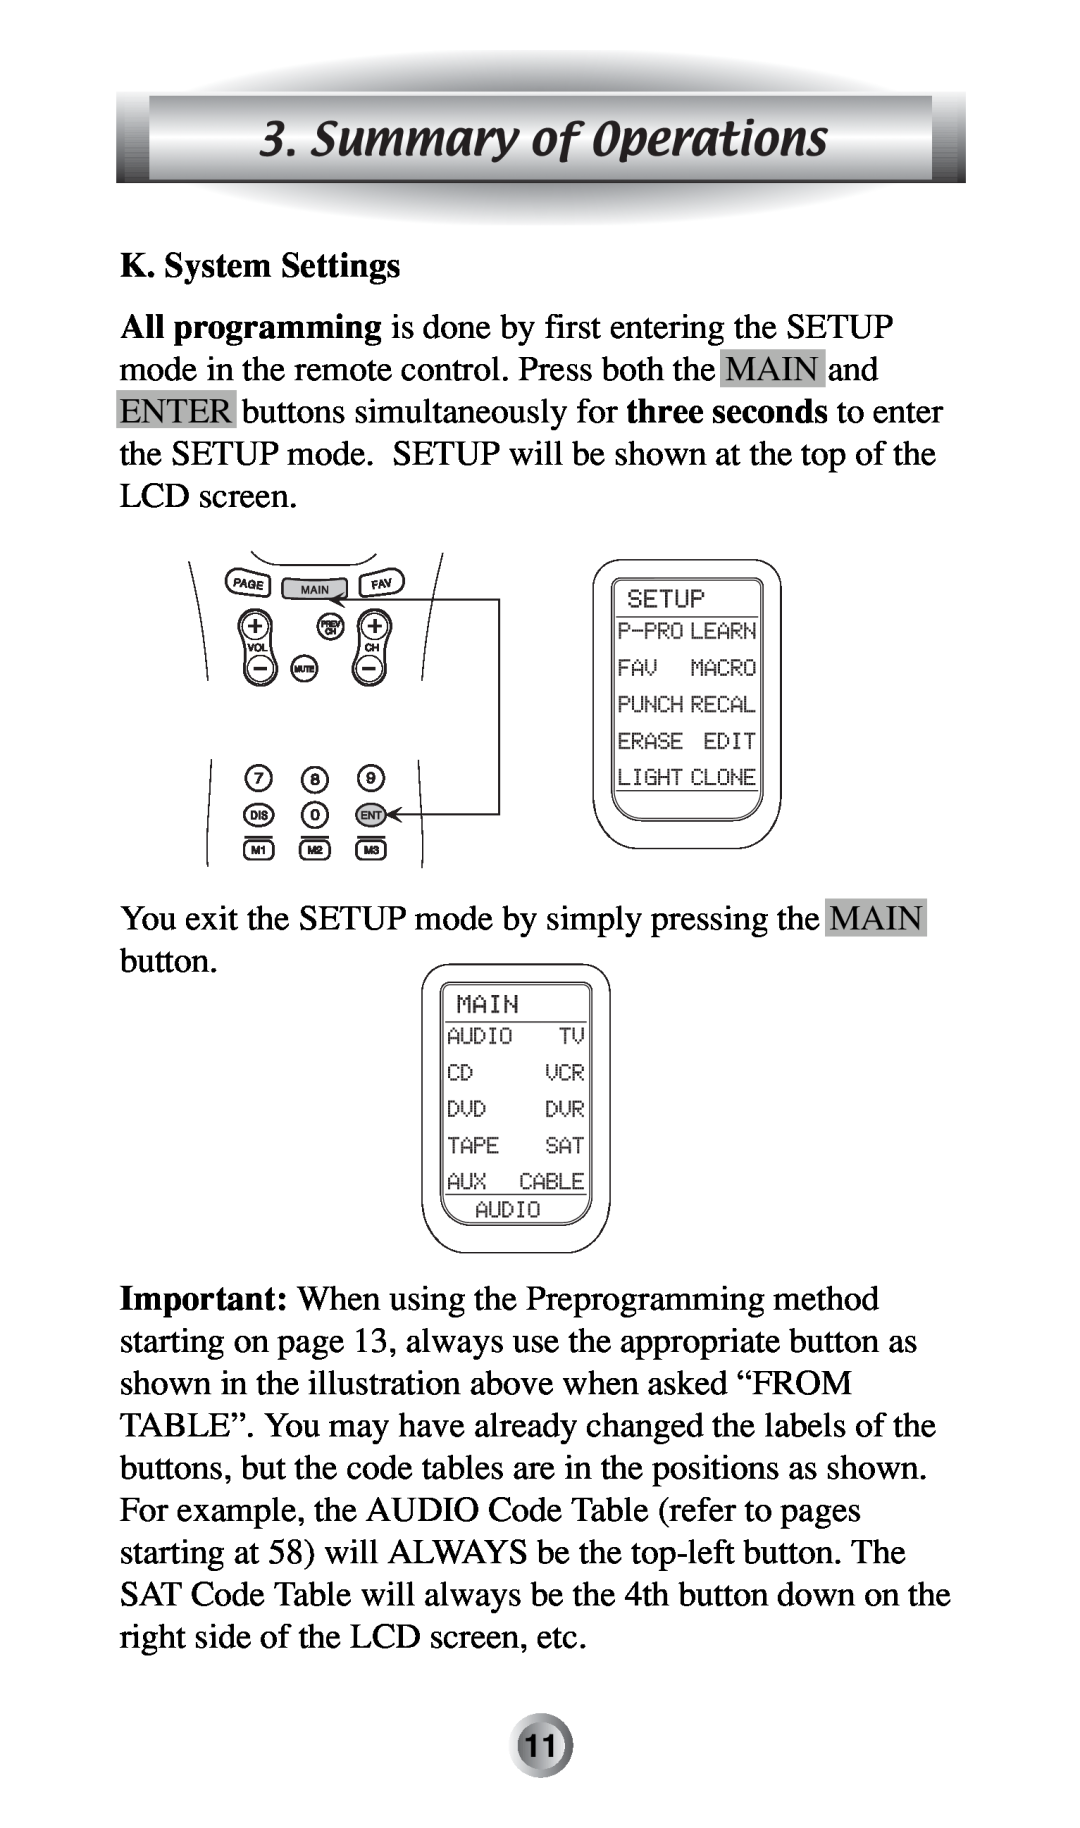 Radio Shack MX-500TM manual Summary of Operations, K. System Settings 